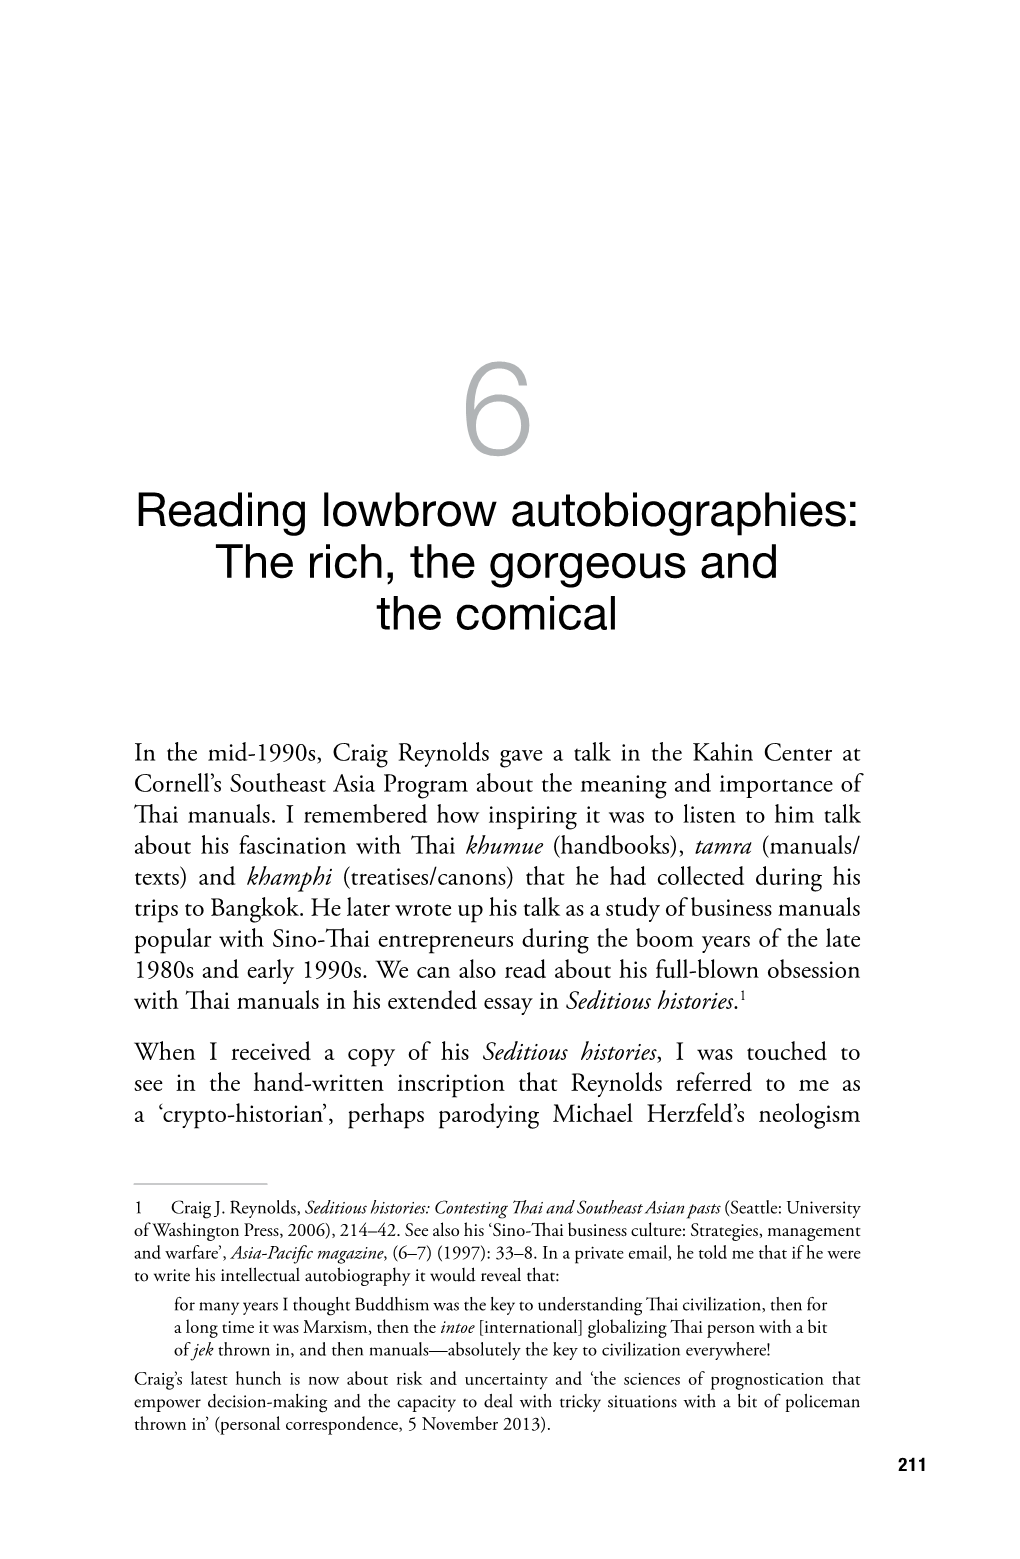 6. Reading Lowbrow Autobiographies